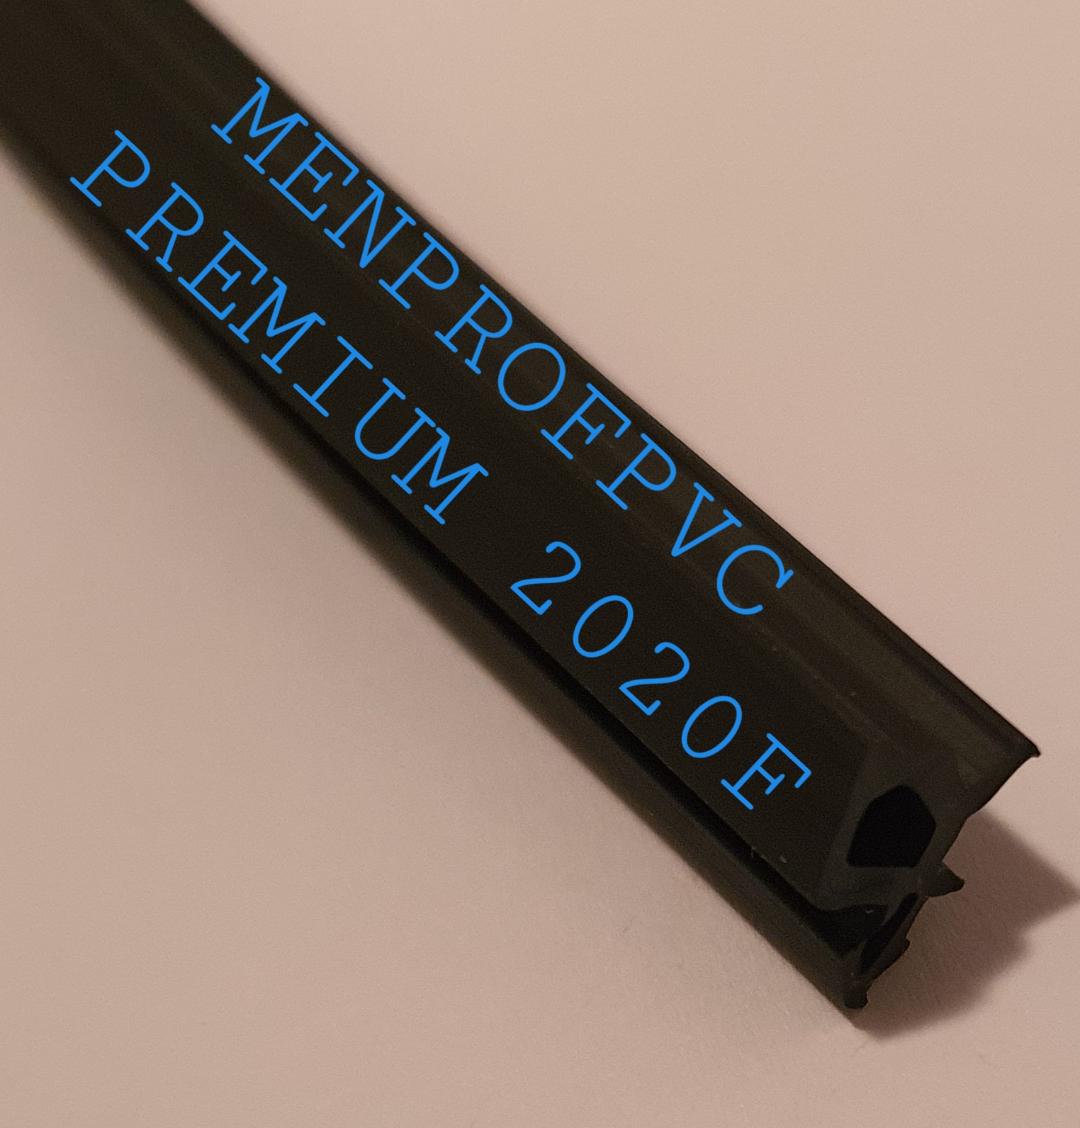 Garnitura-premium-2020-2.jpg